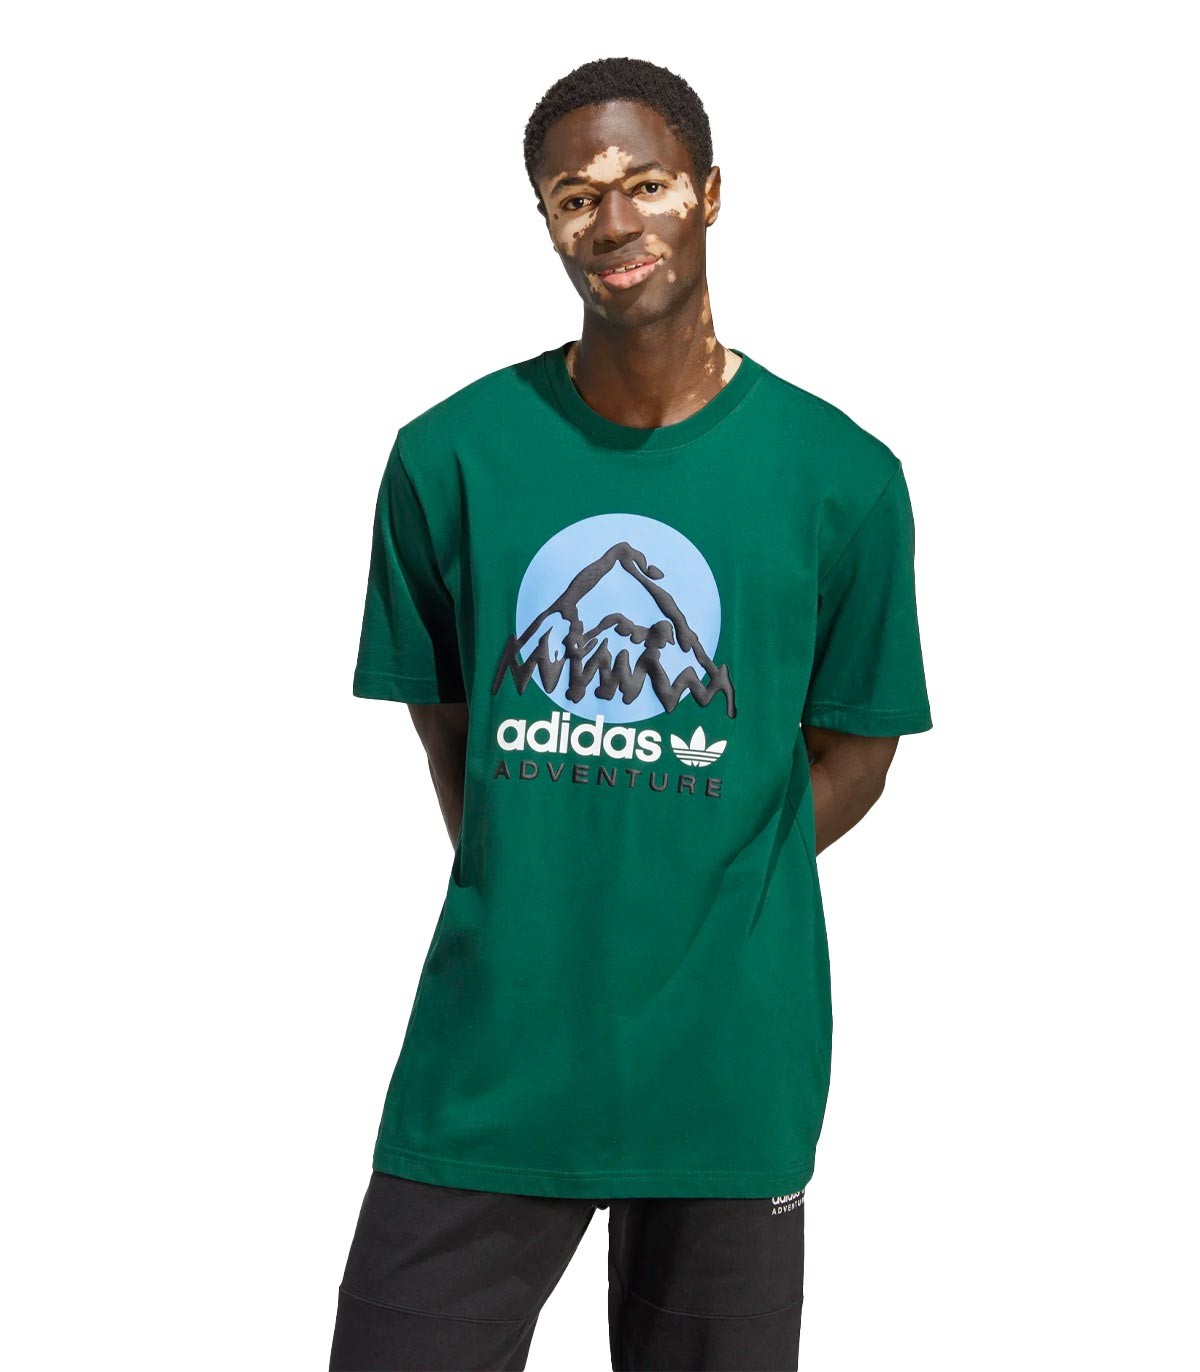 Adidas - Camiseta Adventure Mountain - Verde